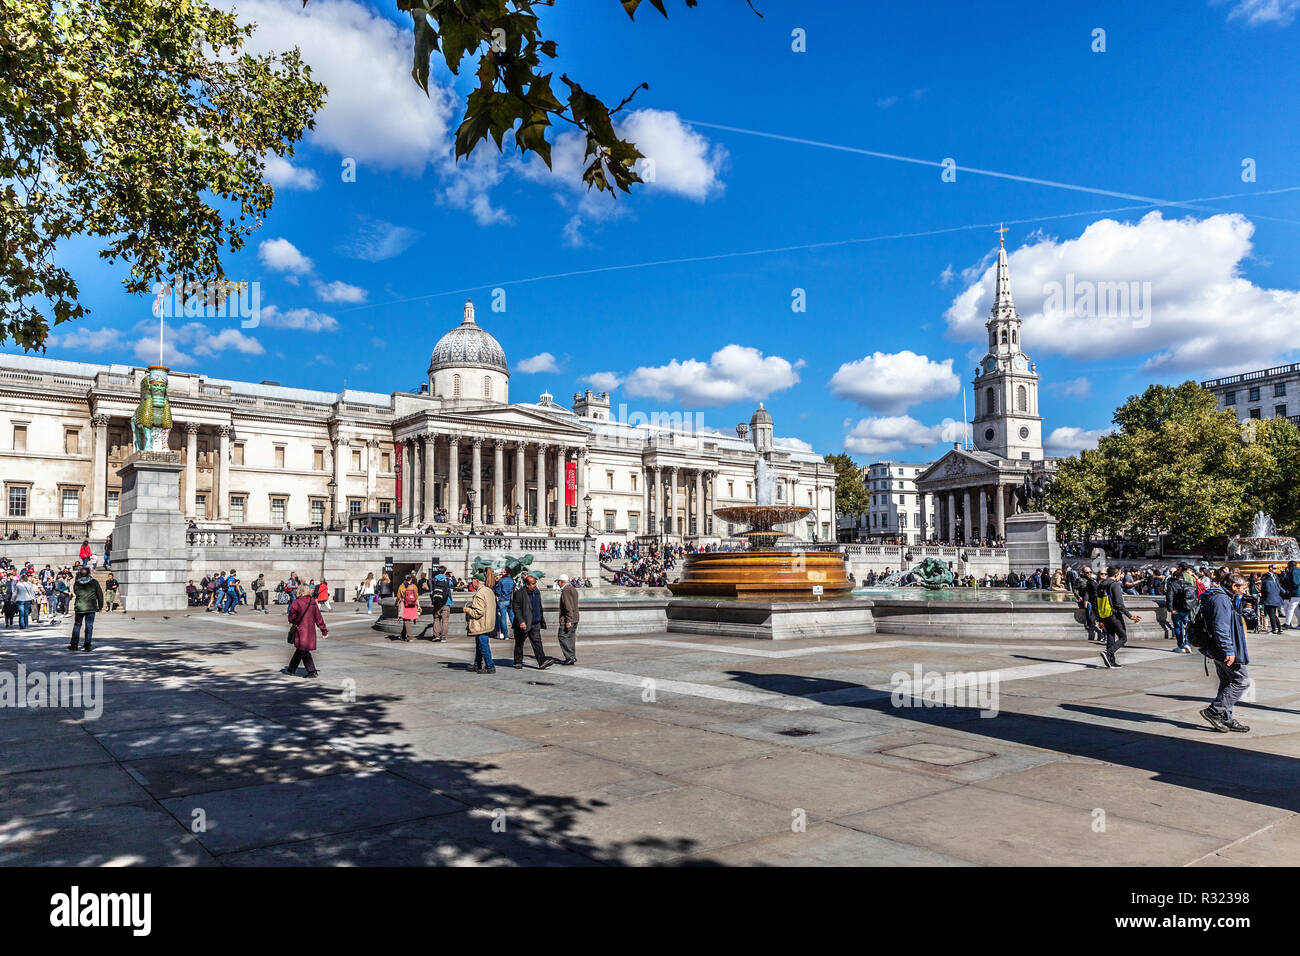 Trafalgar Square, London, England, UK. Stock Photo